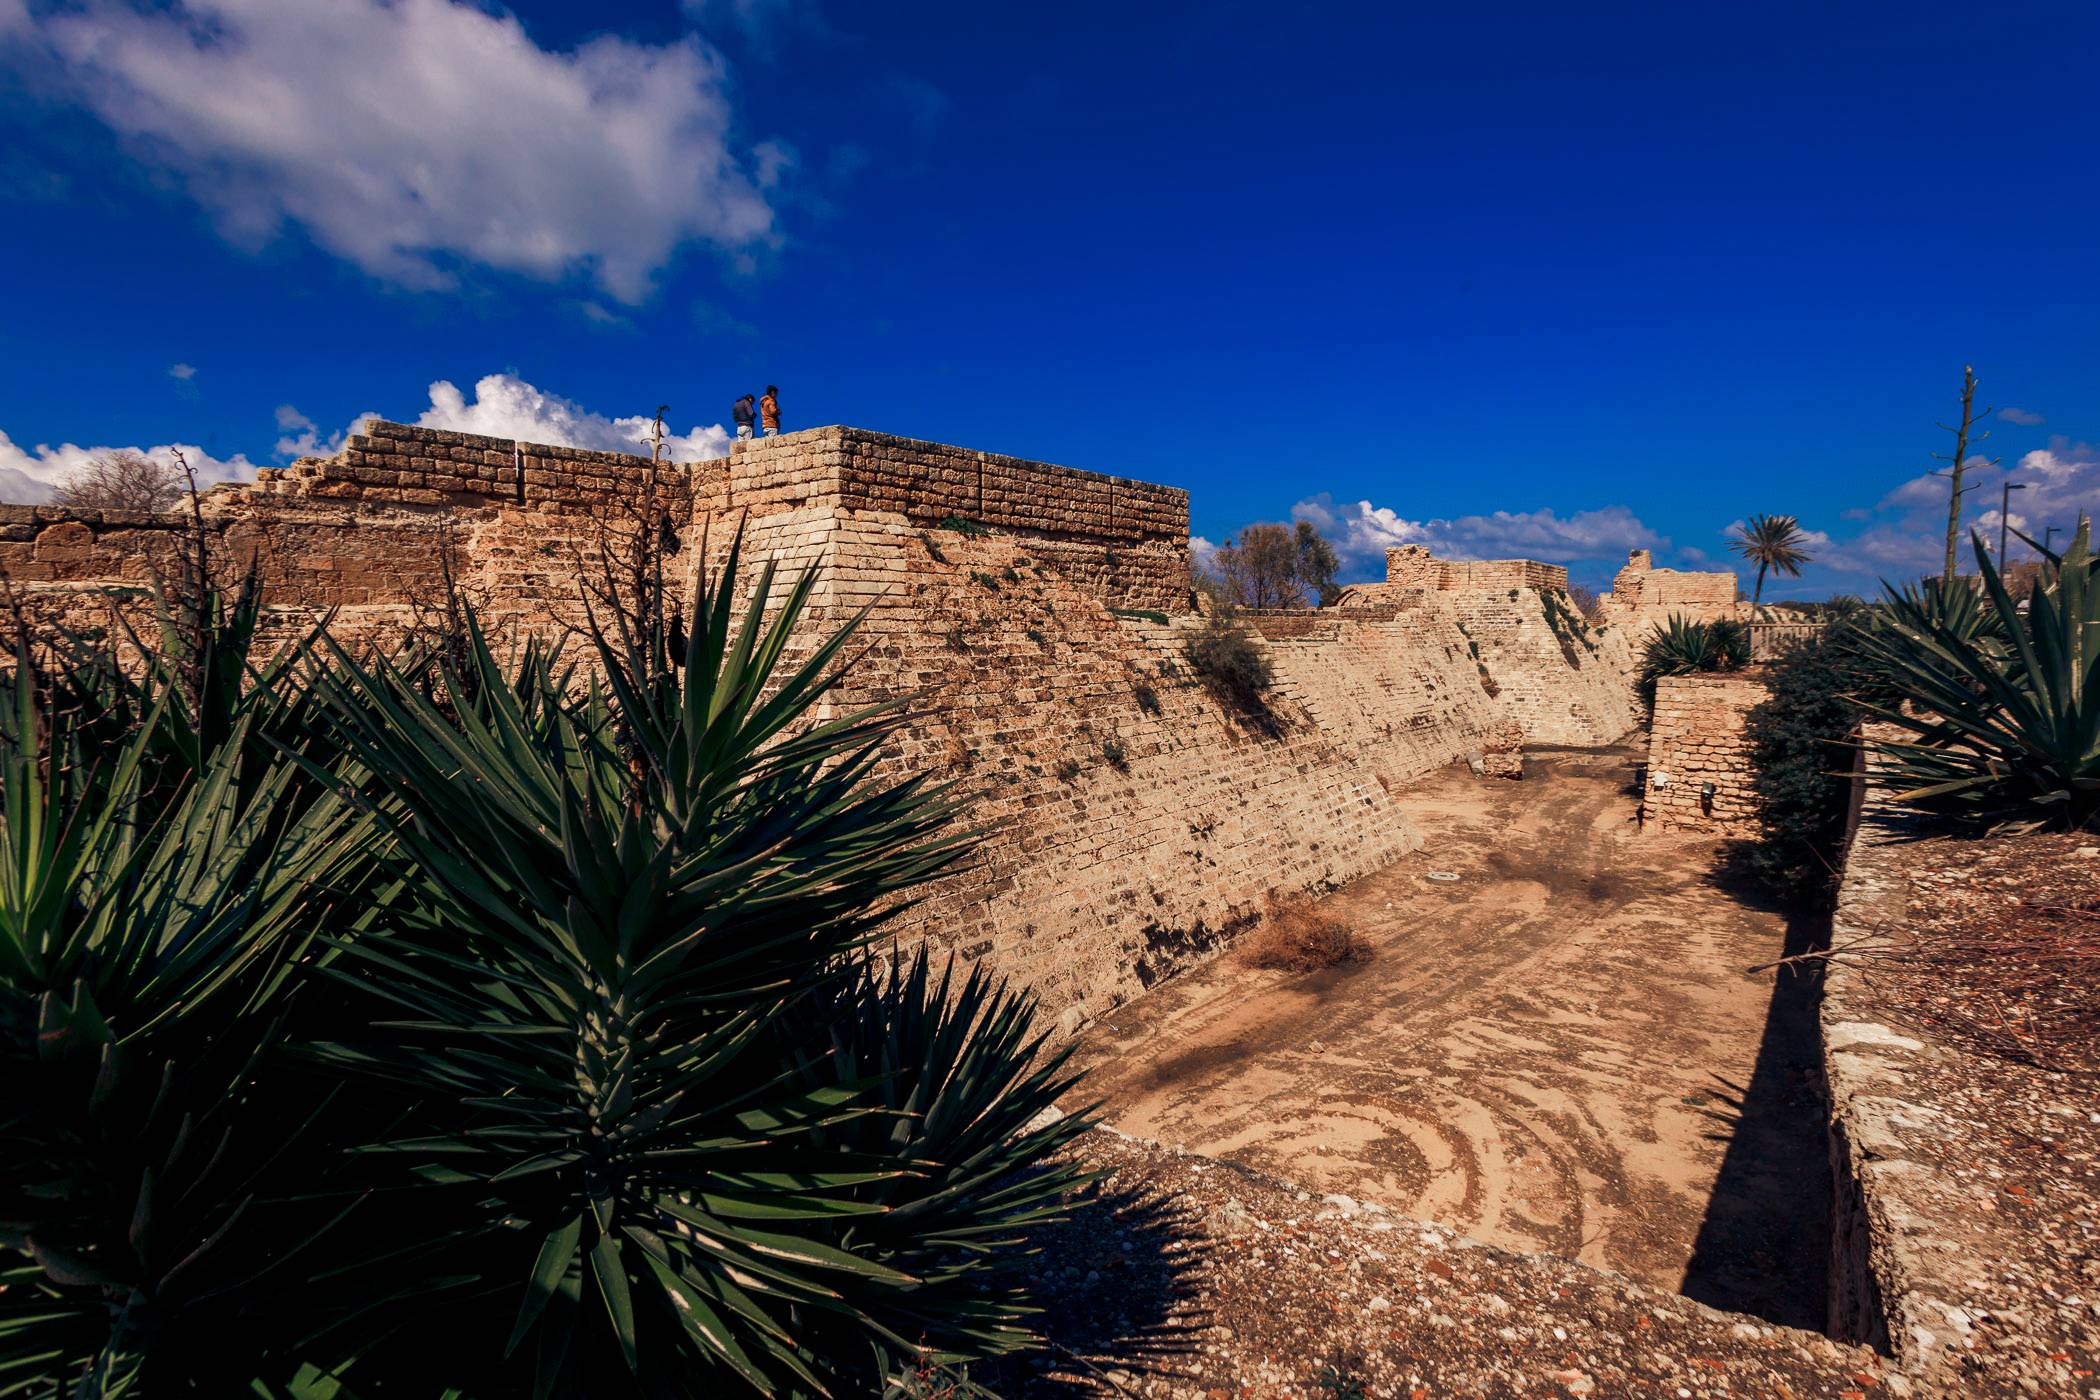 Axeman's Travelfeed #015 - Caesarea Maritima Part #01 - Behind The Photo Contest Entry